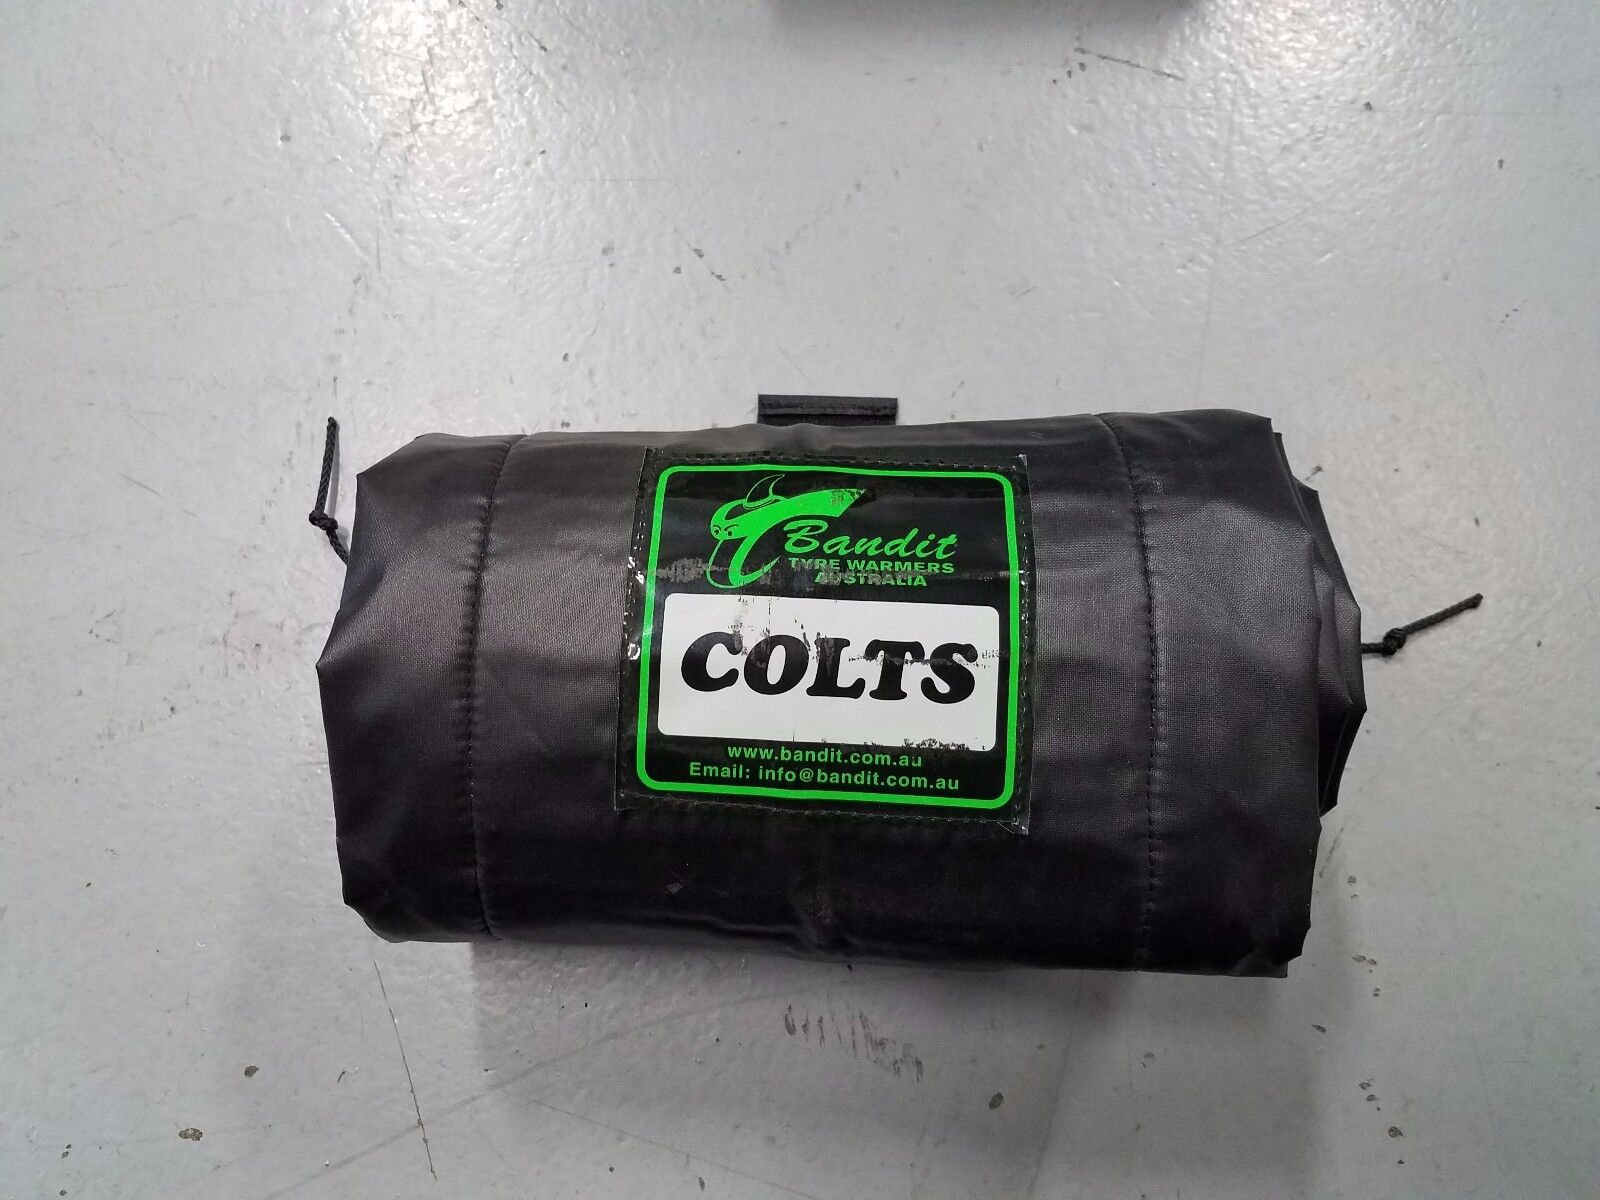 Bandit Colts Tire Warmer, 1 Front Black, fits: 17 inch Superbike/Supersport tire